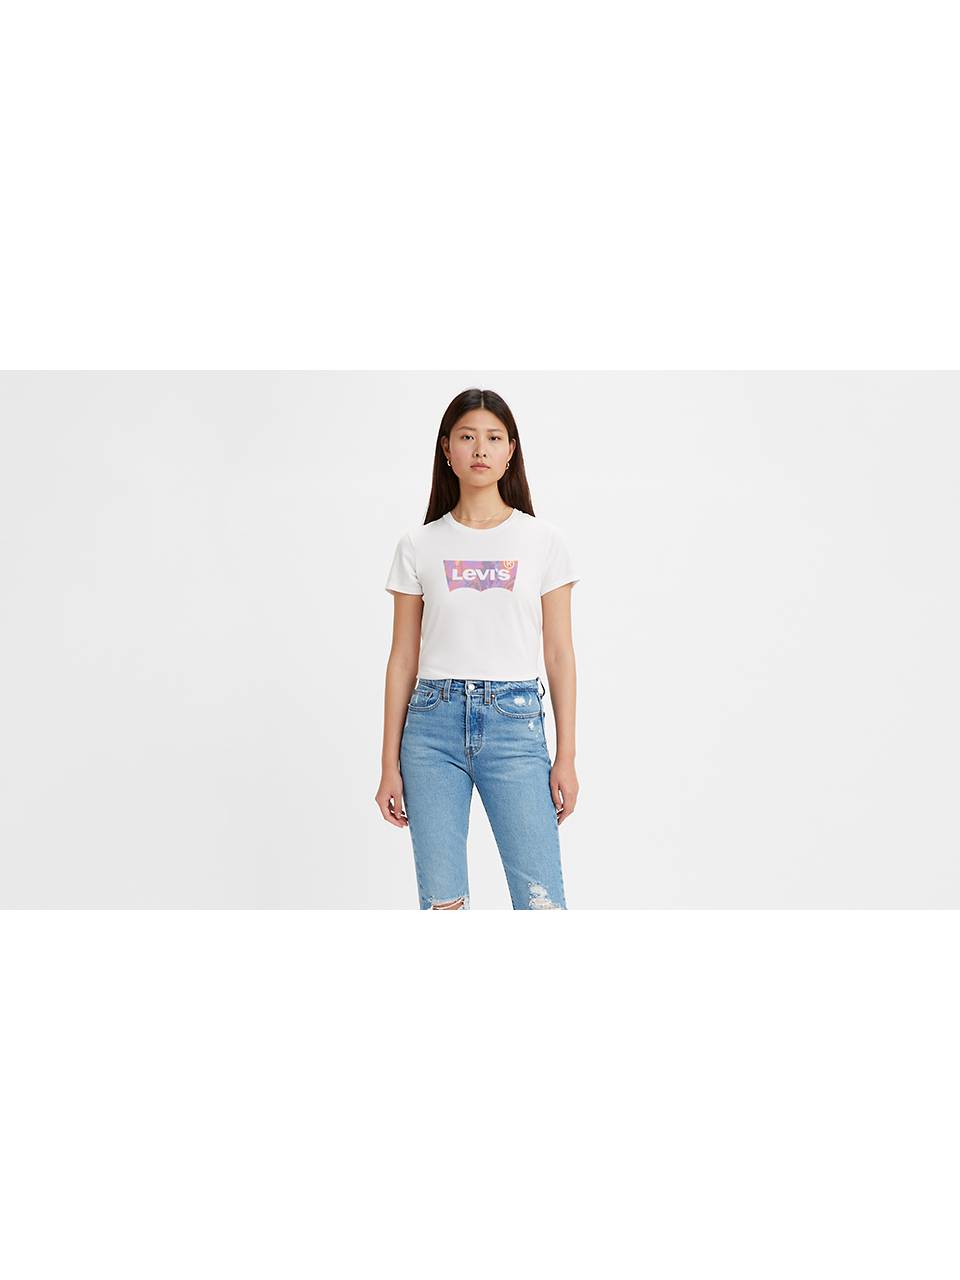 Women's Tops | Women's White T-shirts & Tops | Levi's® GB